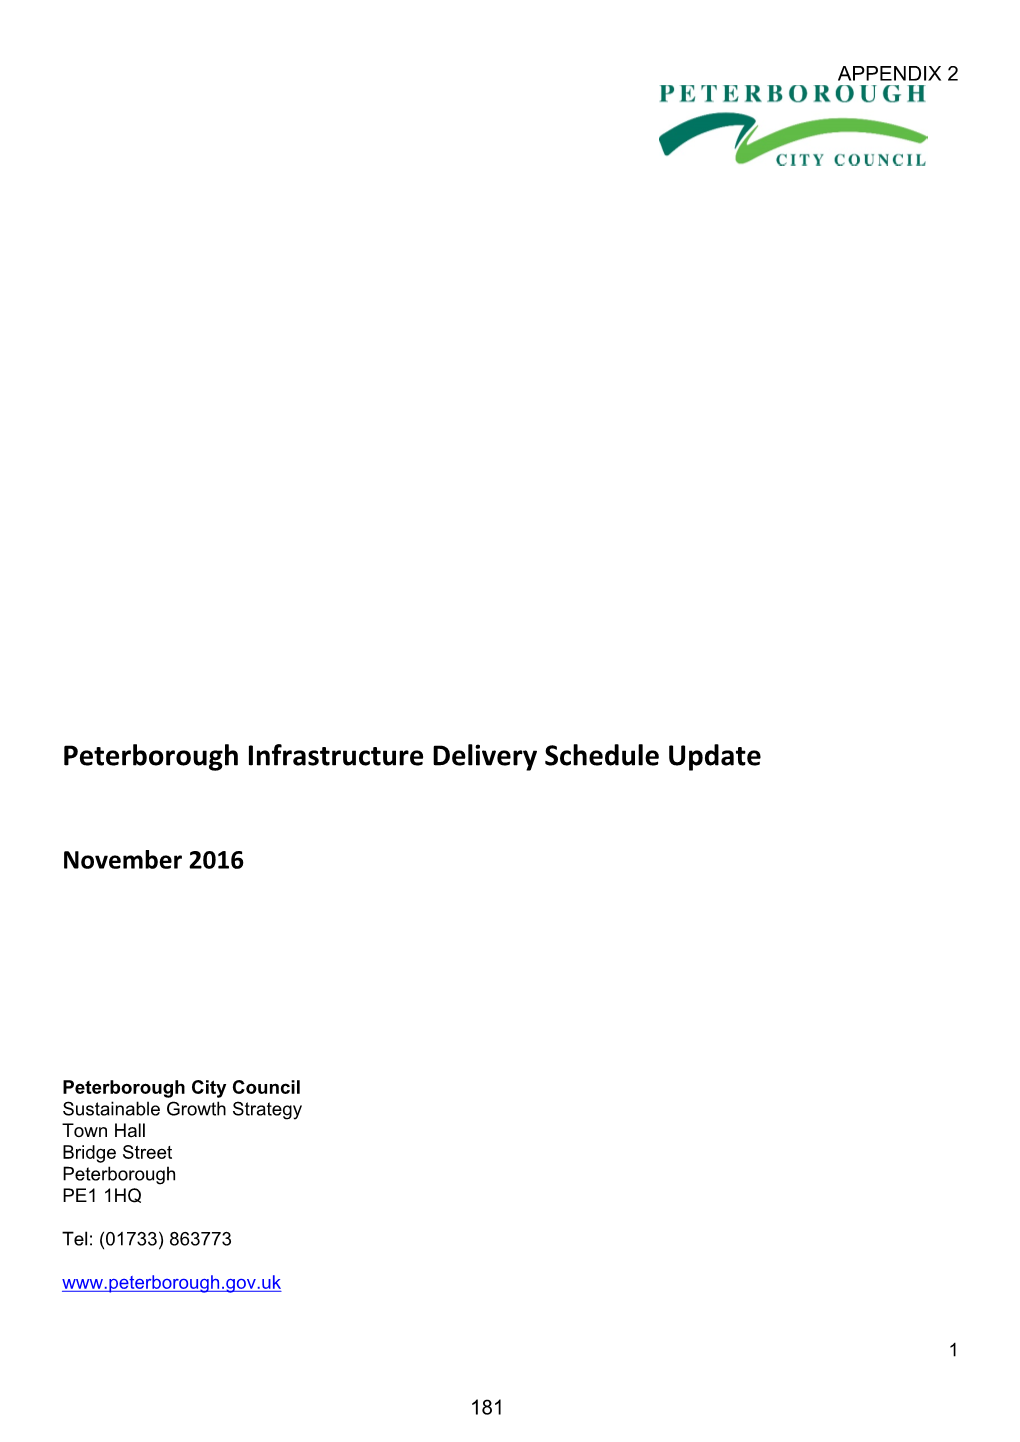 Peterborough Infrastructure Delivery Schedule Update